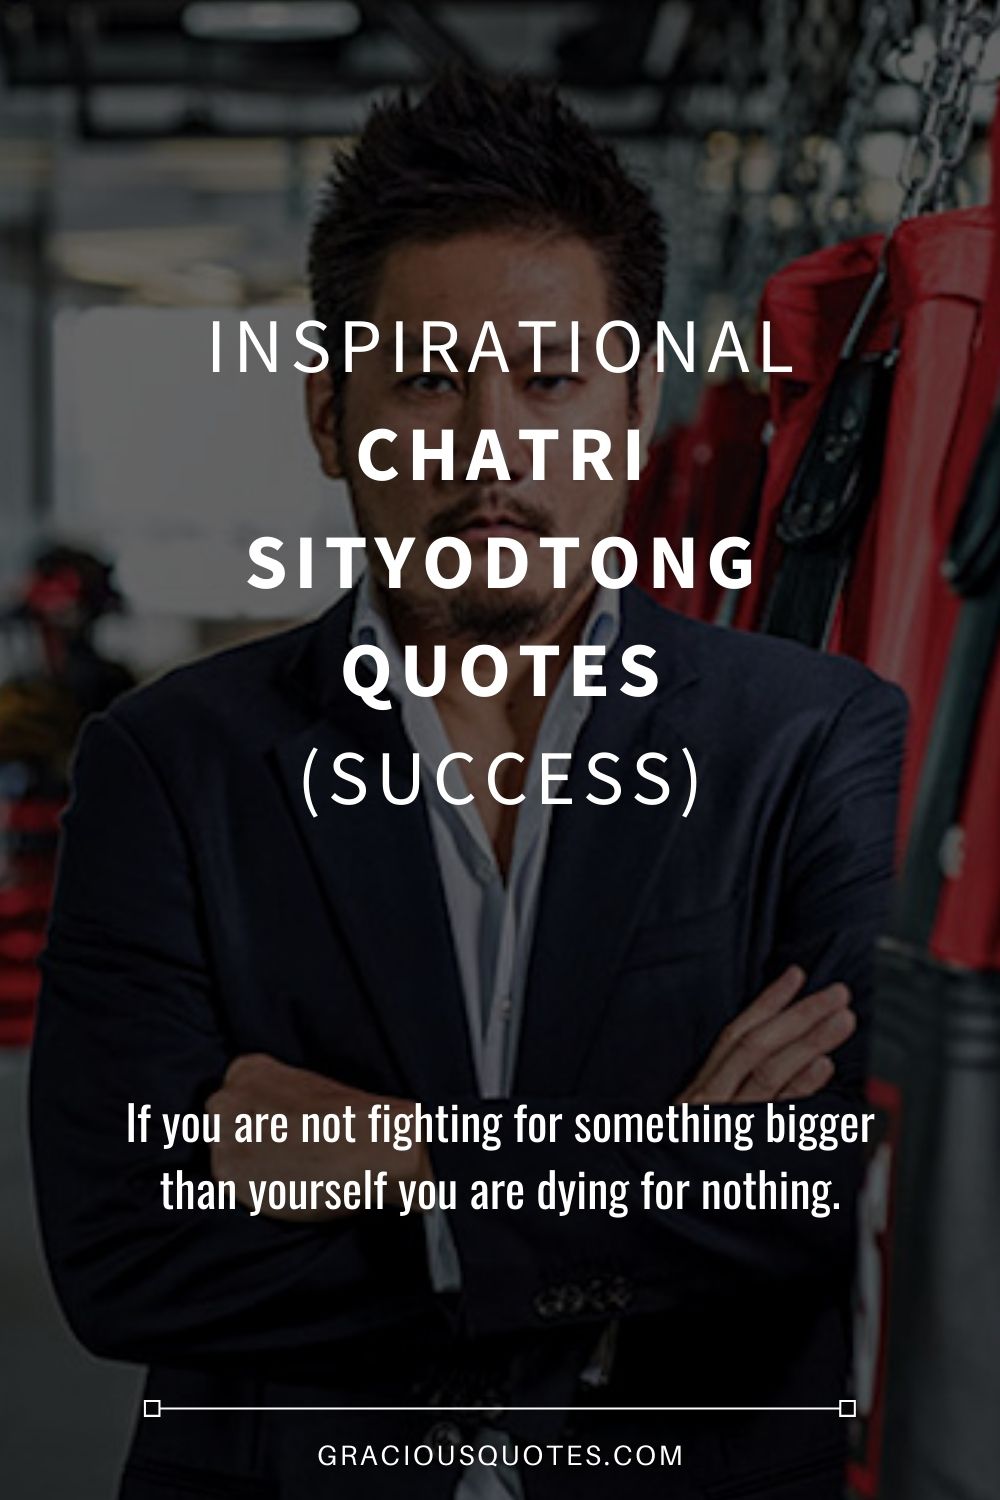 Inspirational Chatri Sityodtong Quotes (SUCCESS) - Gracious Quotes